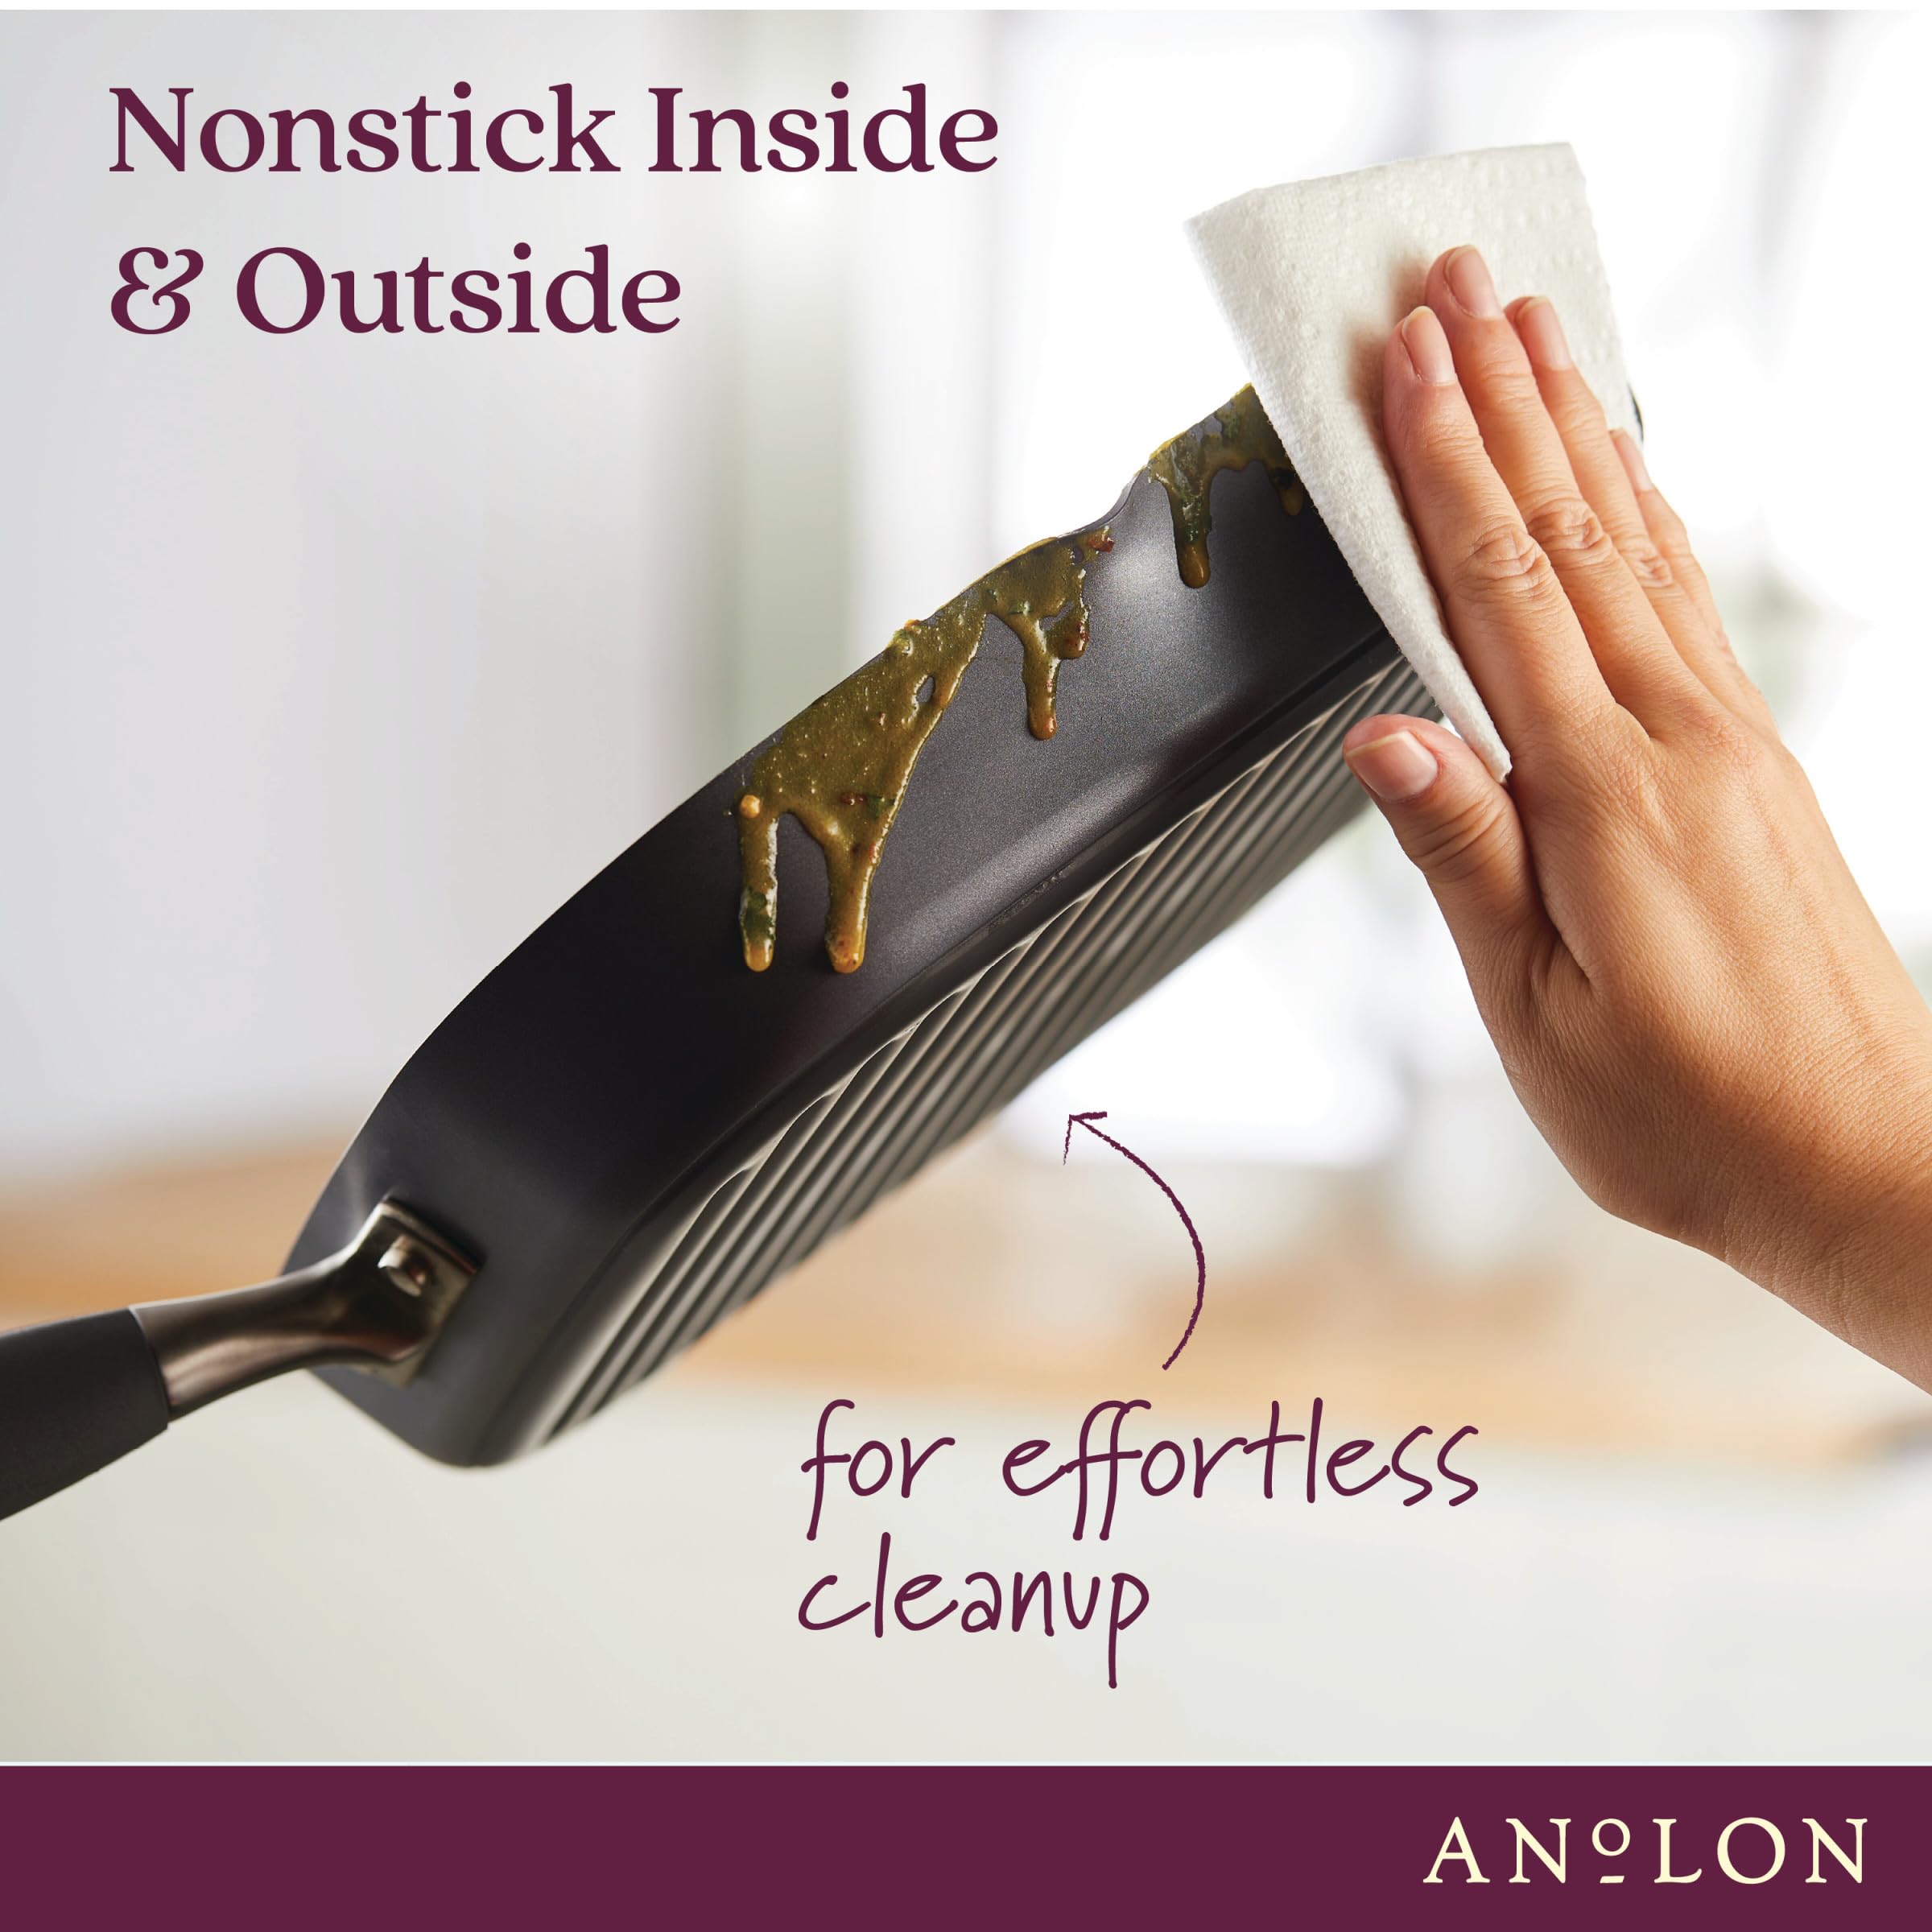 Anolon Advanced Hard Anodized Nonstick Square Griddle Pan/Grill with Pour Spout, 11 Inch, Graphite